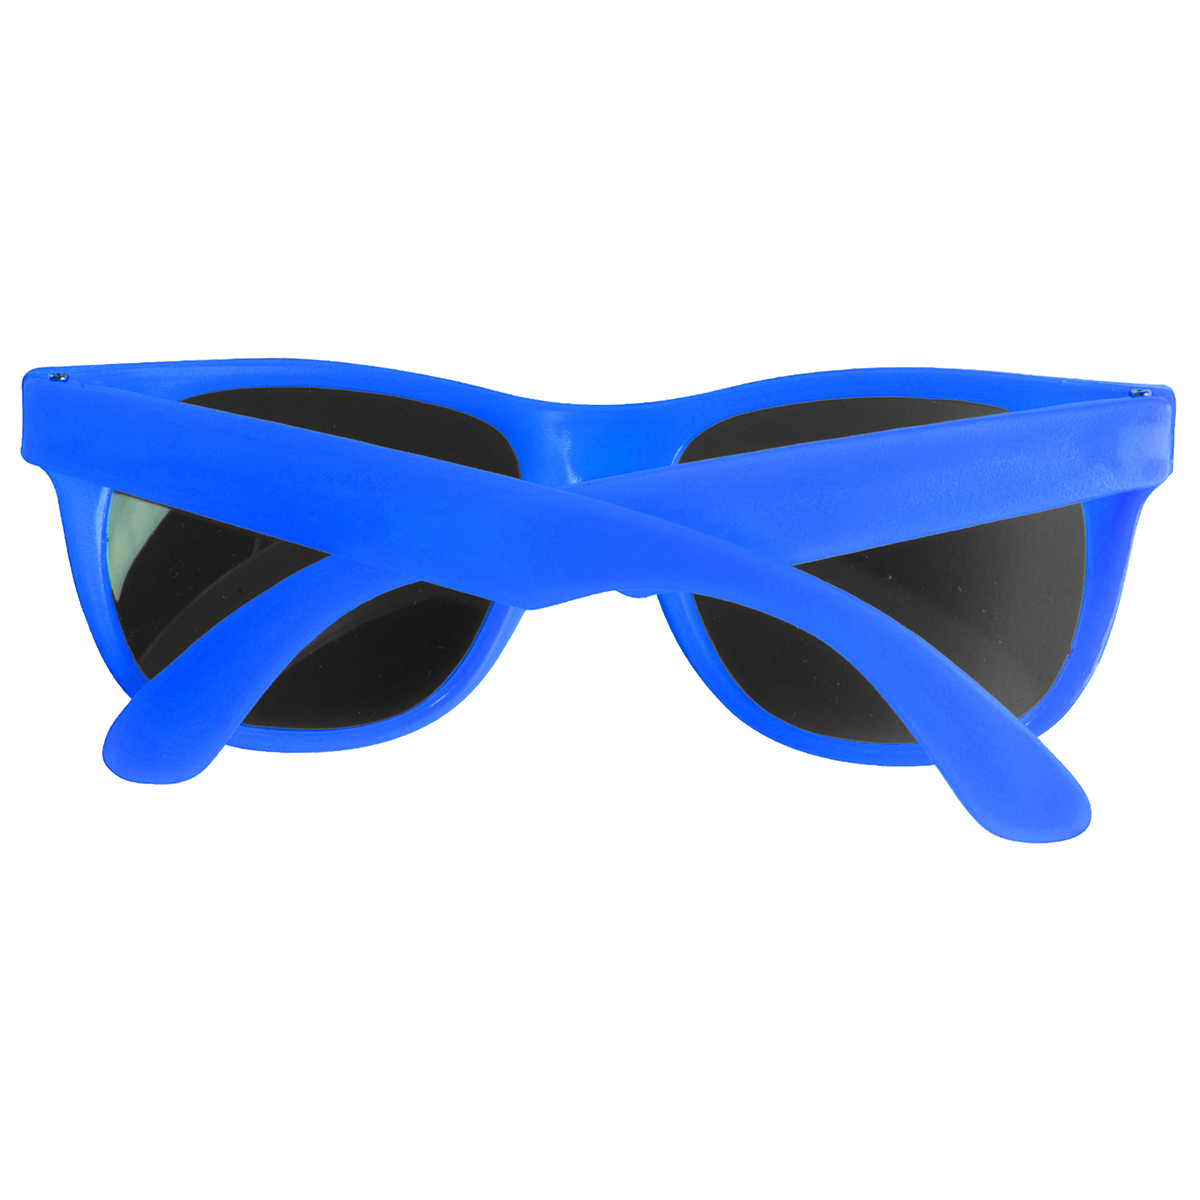 Neon Blue Sweet Sunglasses